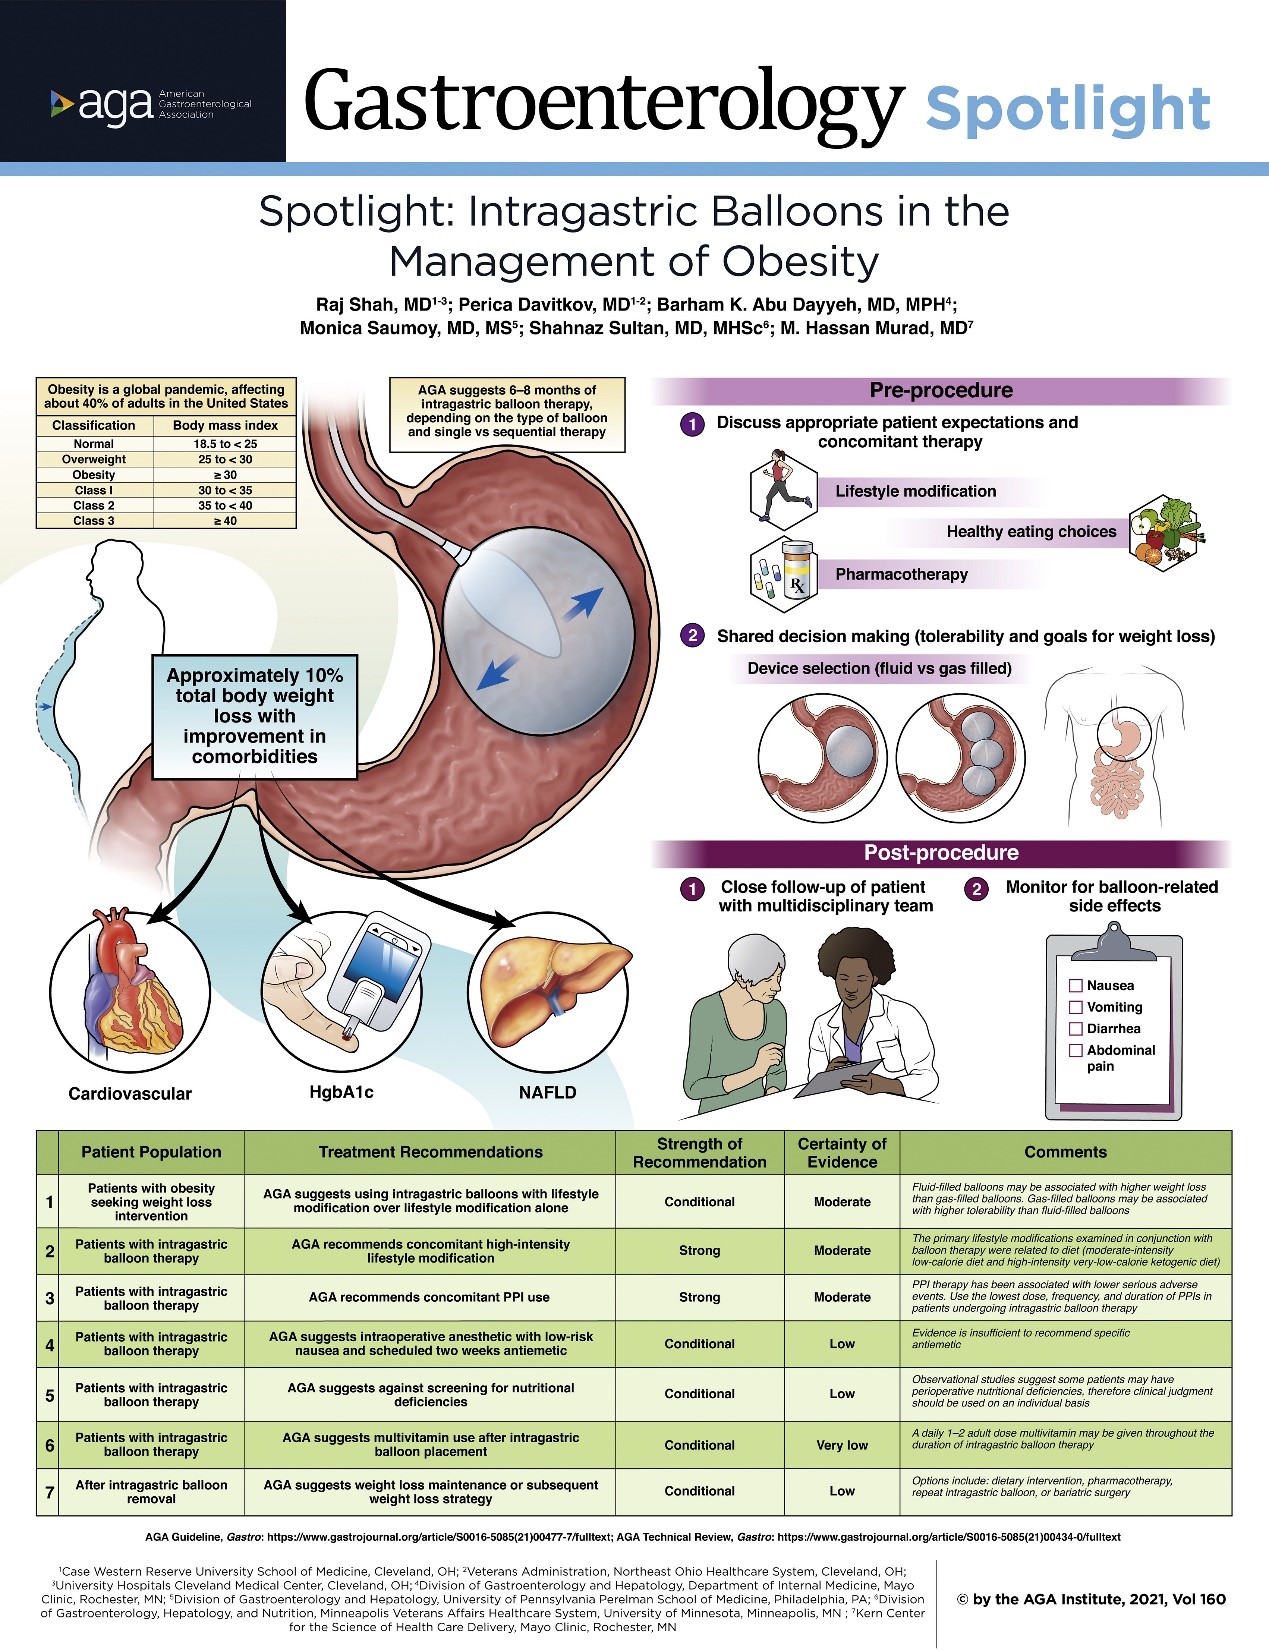 Gastroenterology：美国<font color="red">胃肠</font>病学协会发布有关使用胃内球囊治疗肥胖症的正式建议